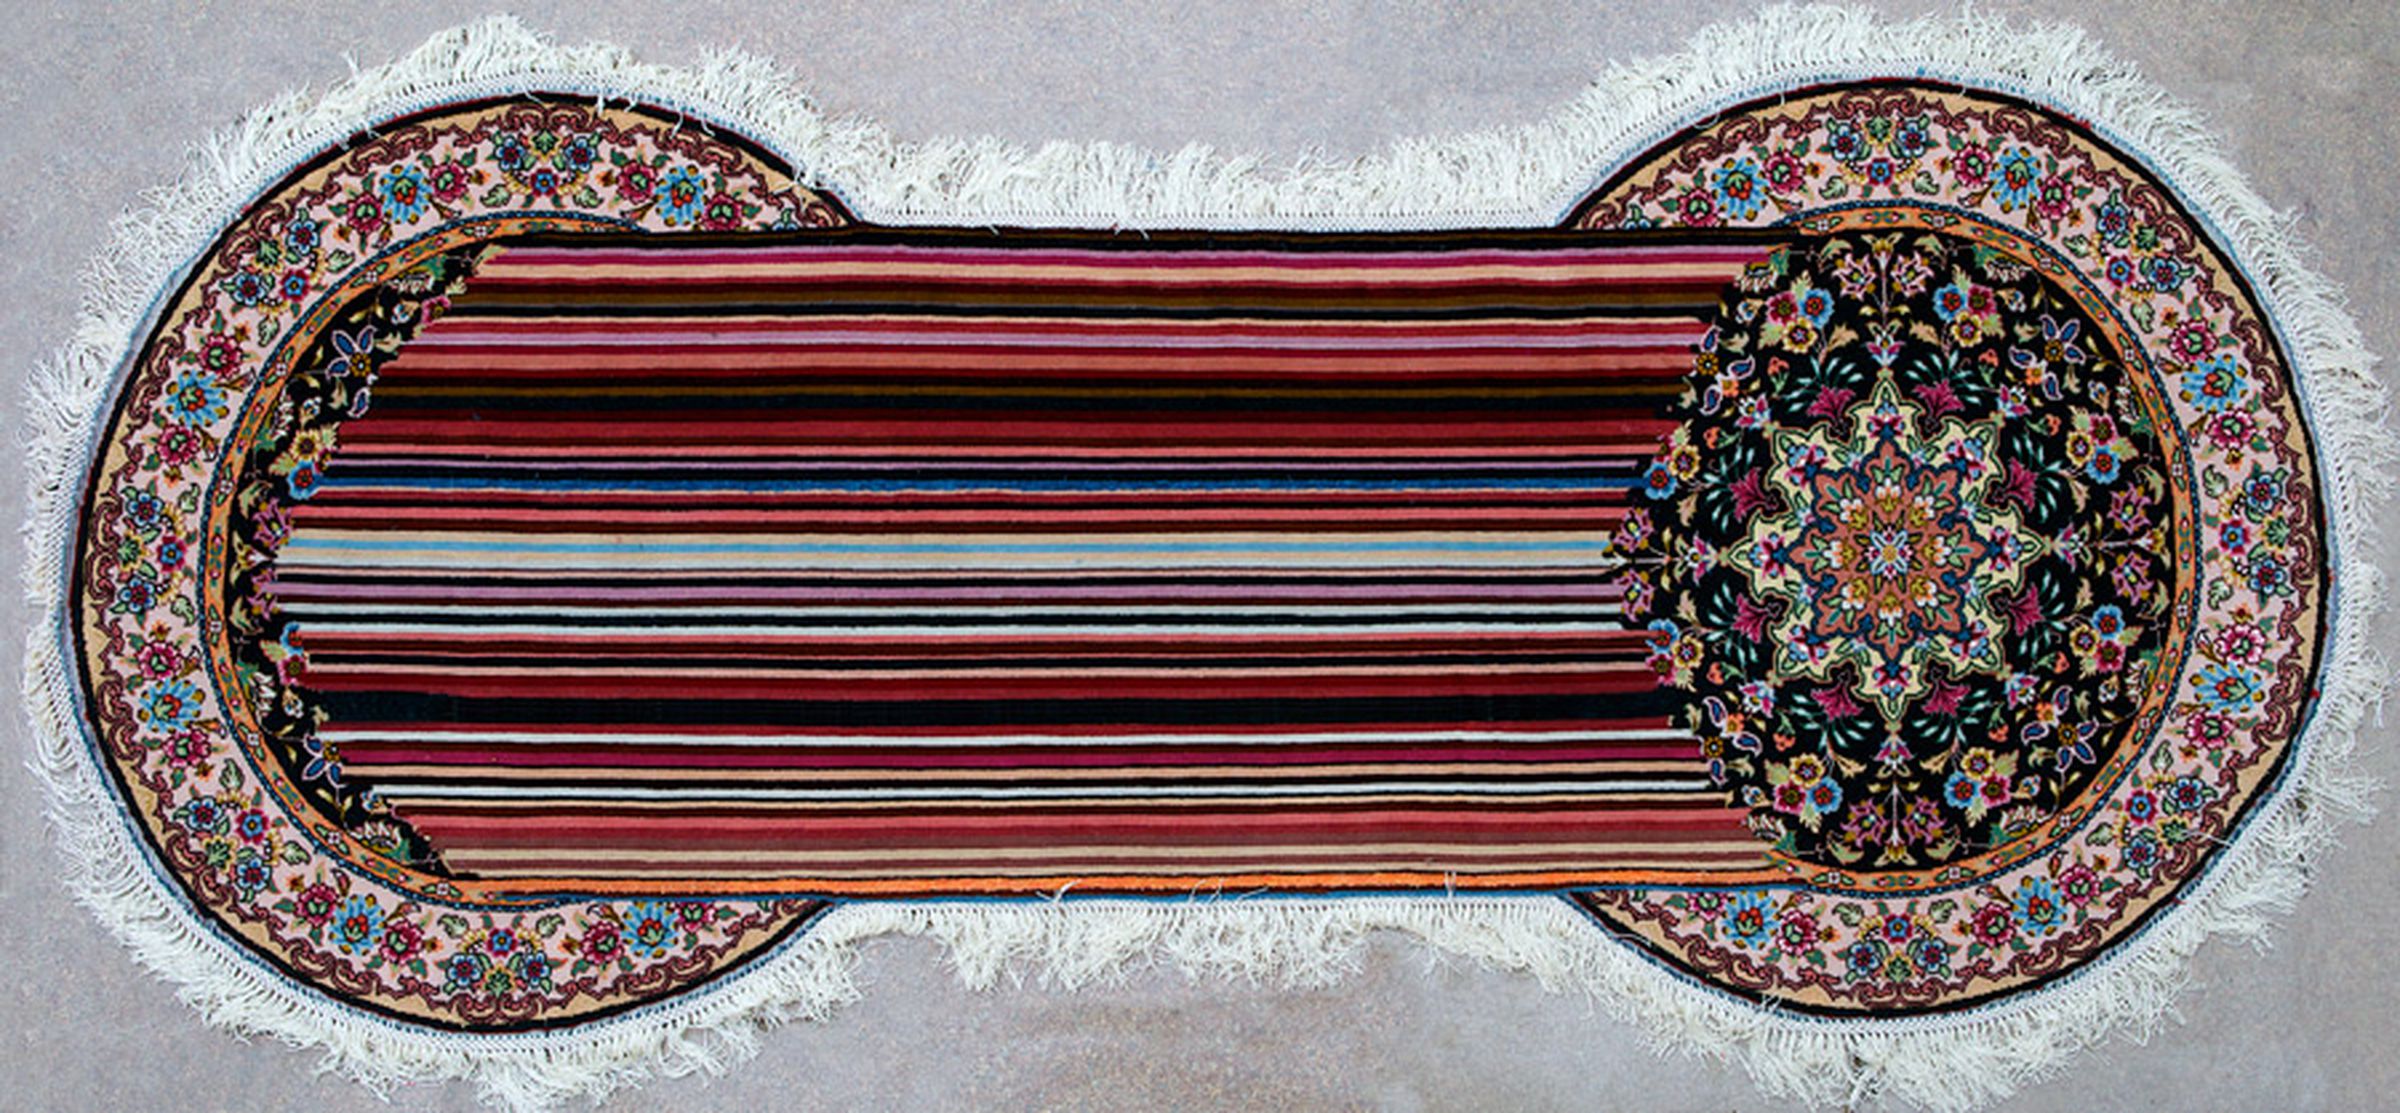 Digital art bleeds into carpet-making